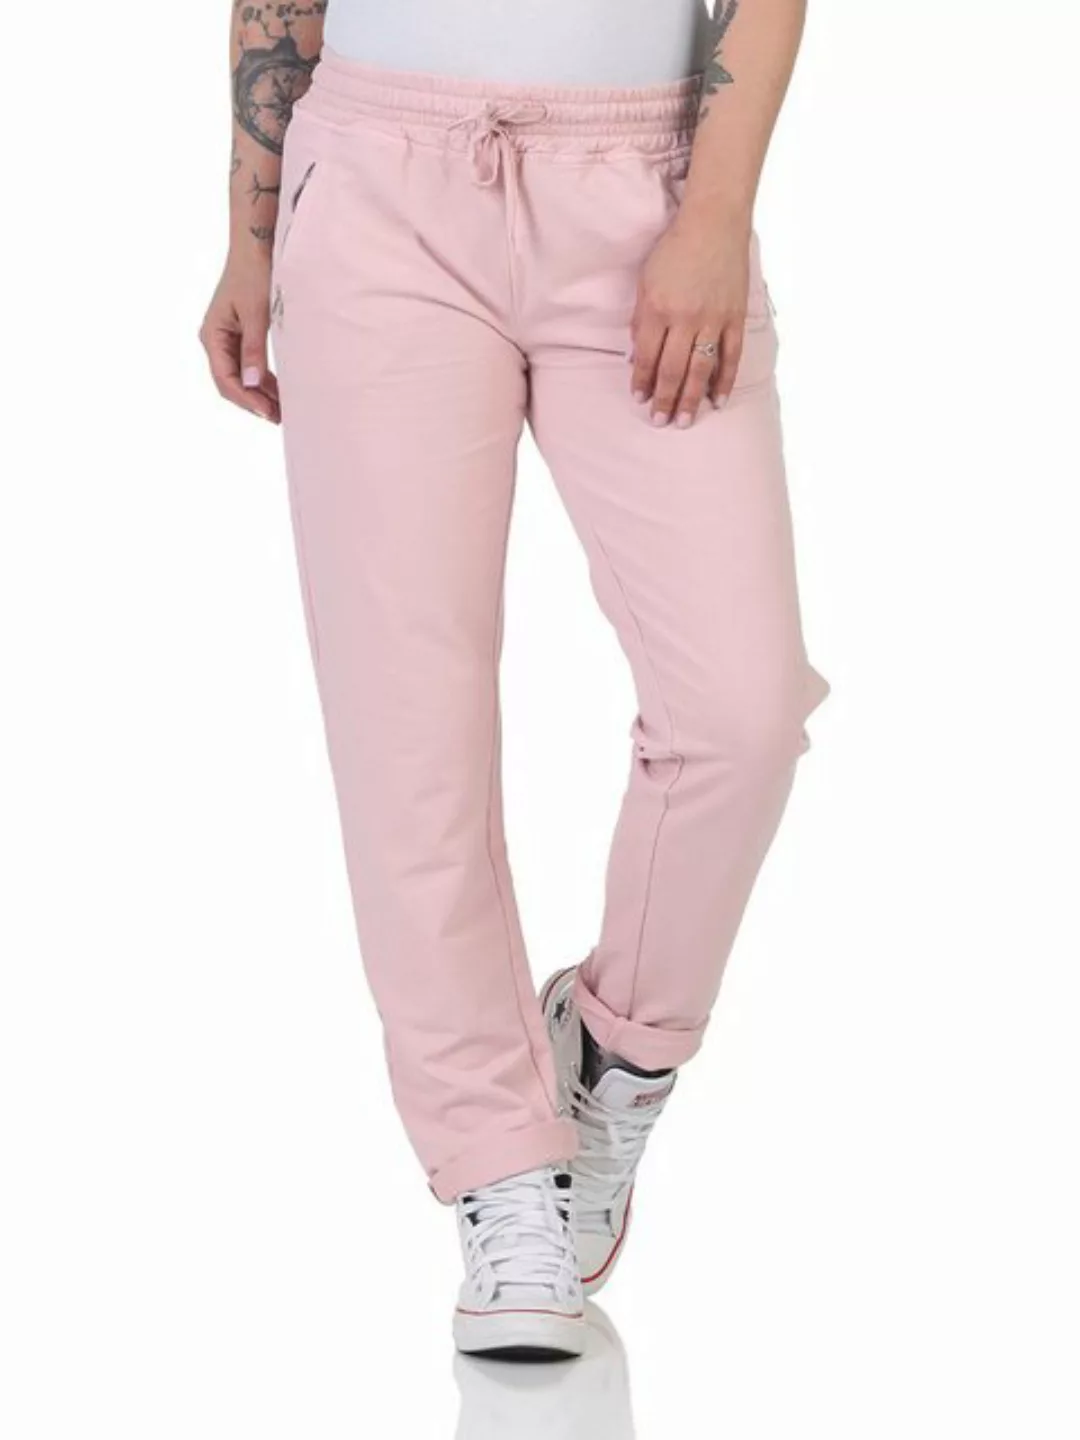 CLEO STYLE Jogger Pants Damen Jogginghose 814136 34-38 Rosa günstig online kaufen